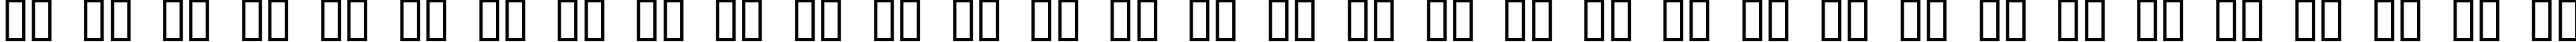 Пример написания русского алфавита шрифтом Angryblue